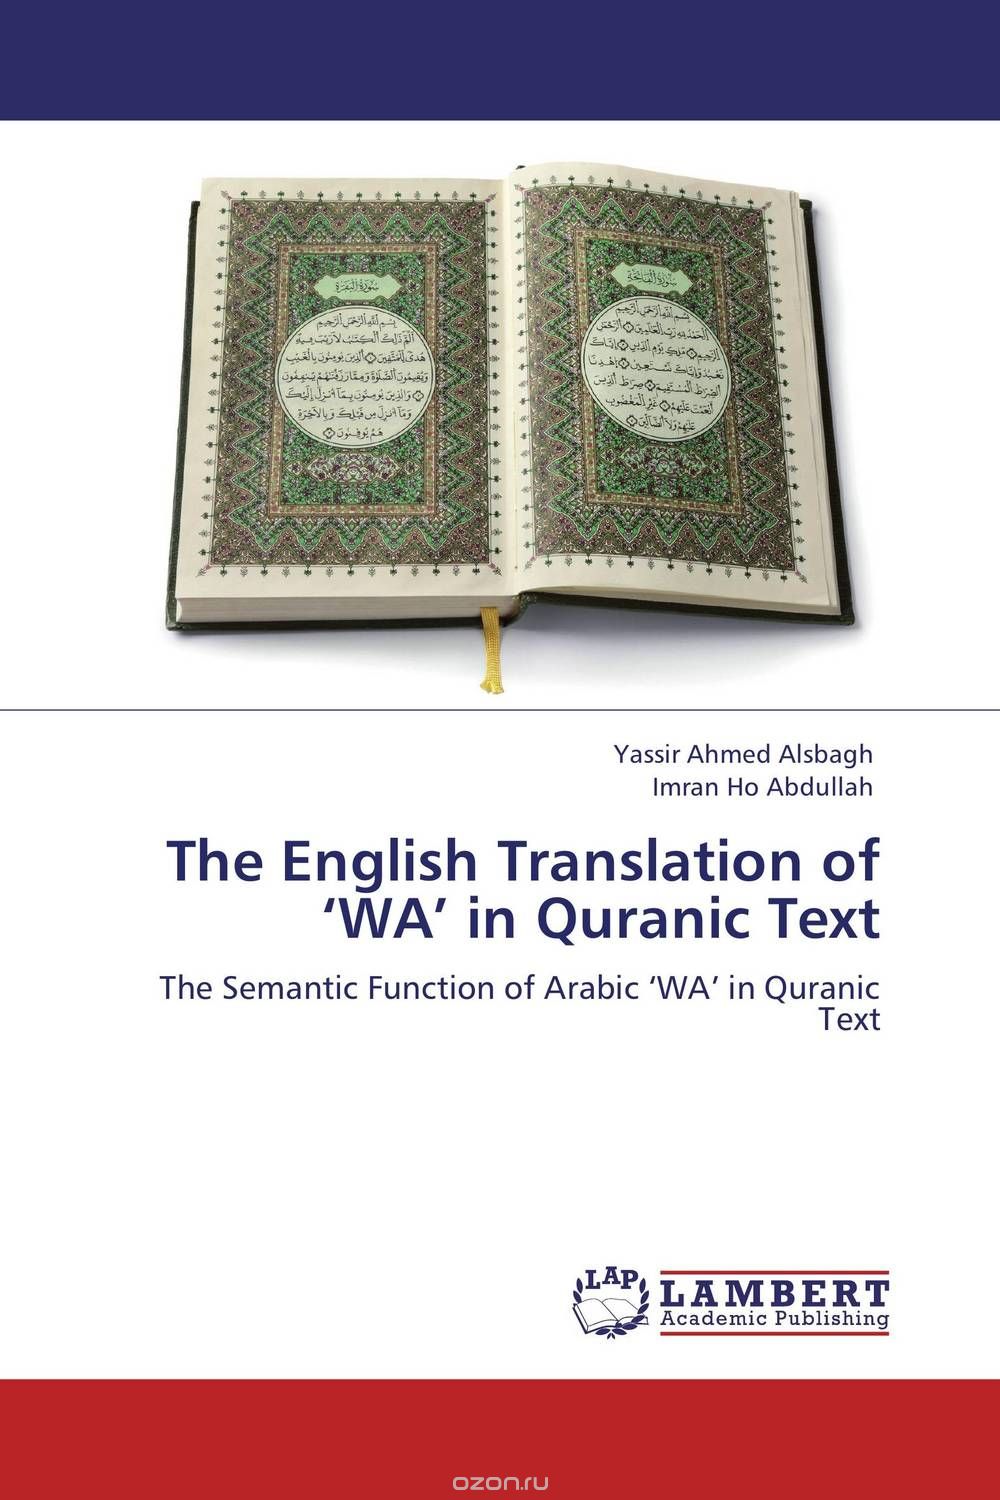 Скачать книгу "The English Translation of ‘WA’ in Quranic Text"